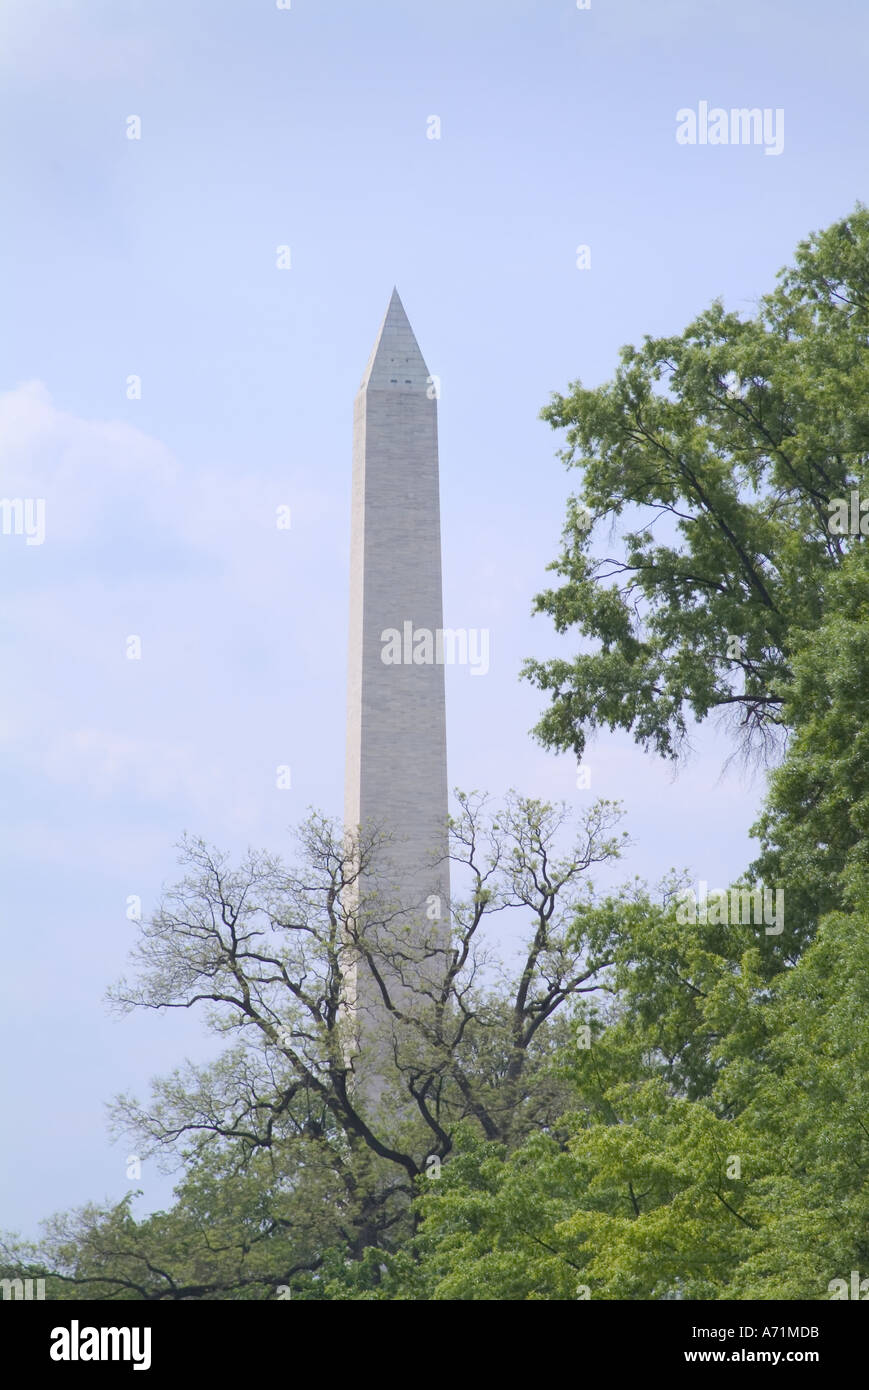 Washington Monument Memorial, Washington DC USA Banque D'Images